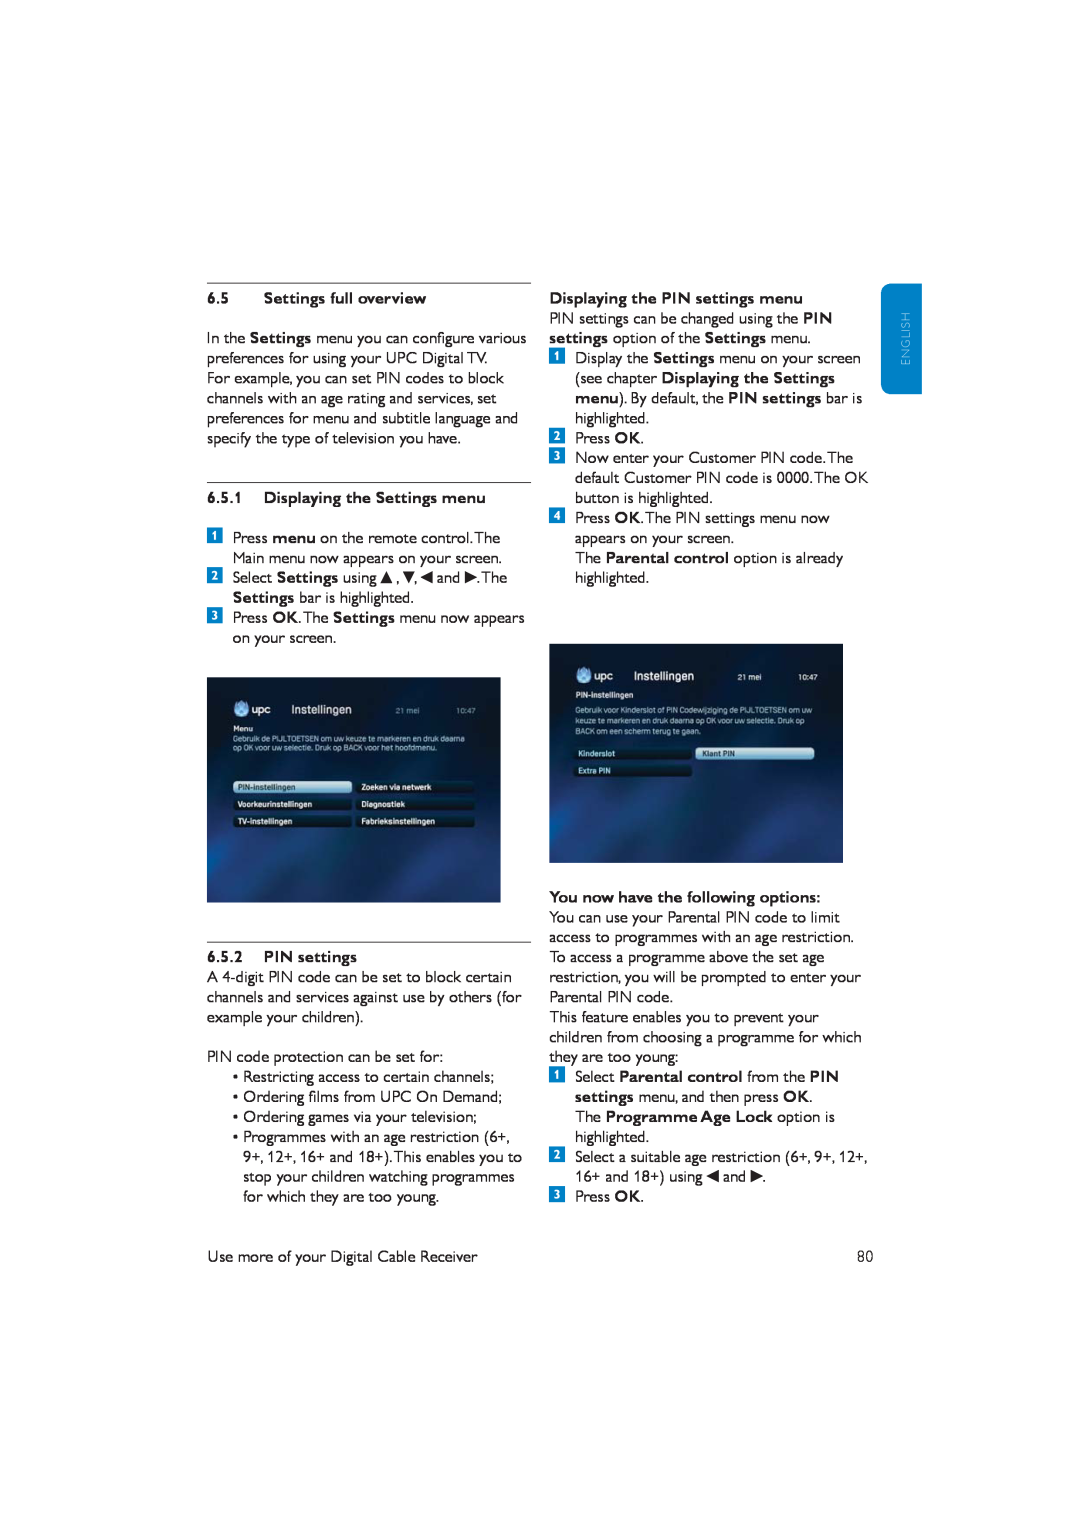 Philips DCR5012 manual 6.5Settings full overview, 6.5.1Displaying the Settings menu, 6.5.2PIN settings 